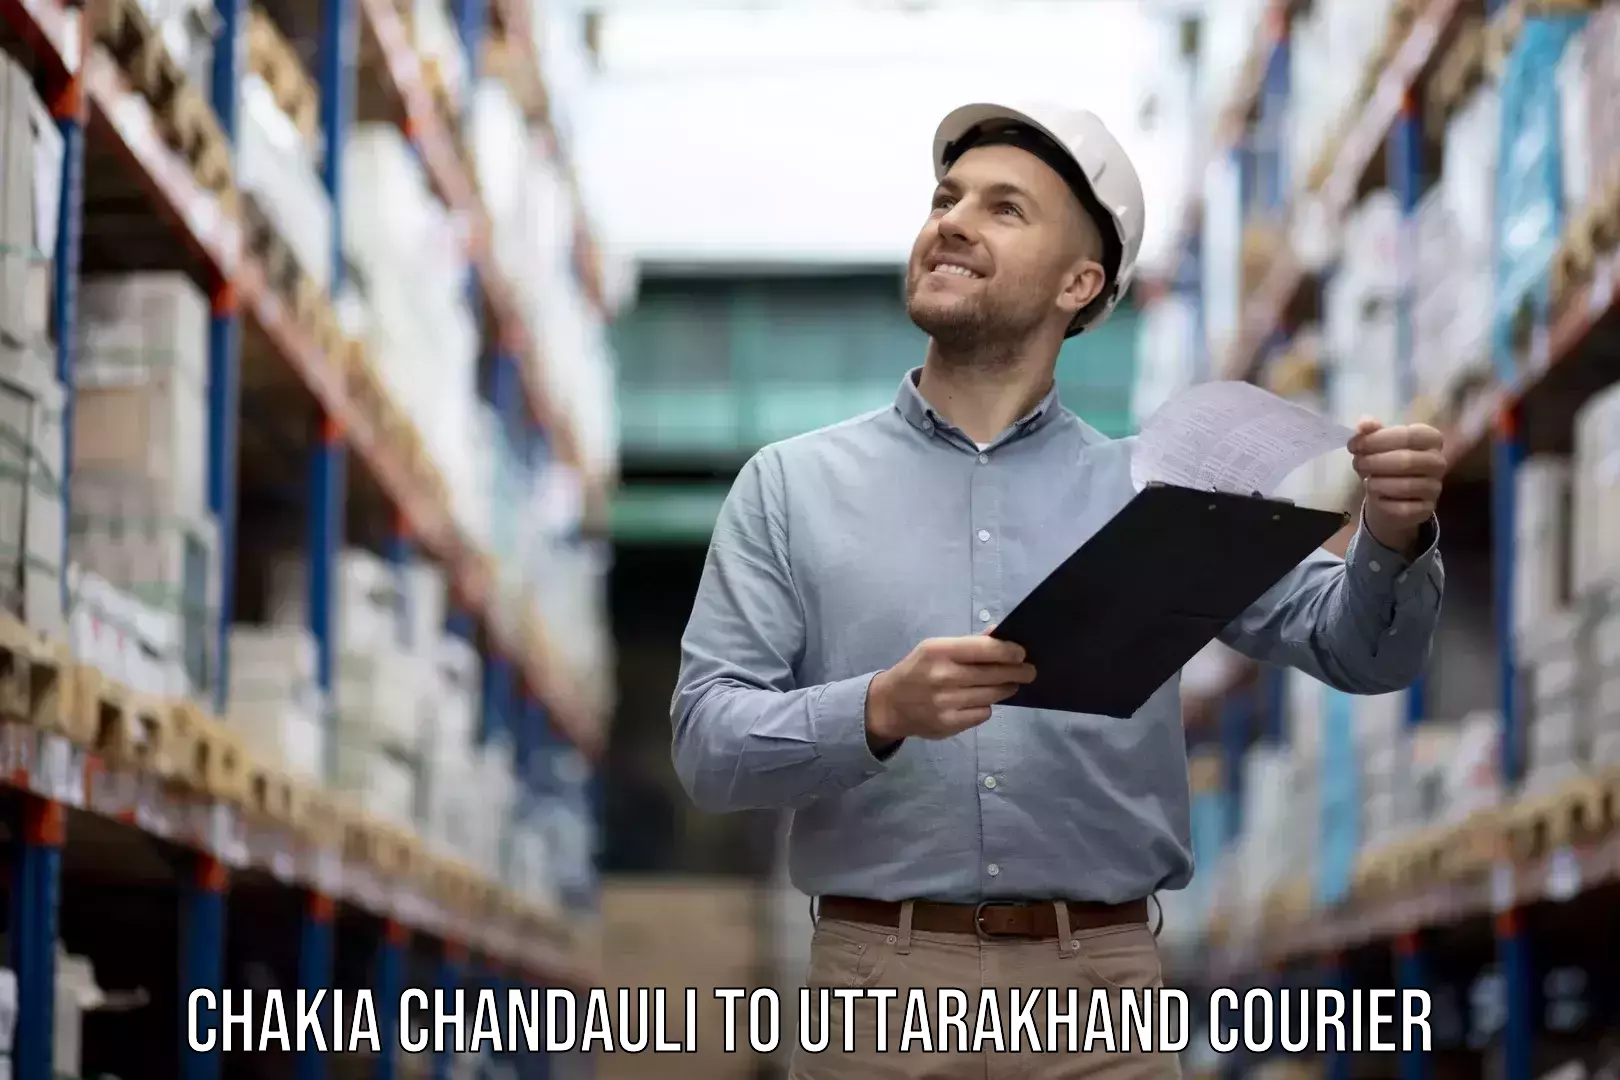 Furniture delivery service Chakia Chandauli to Uttarakhand